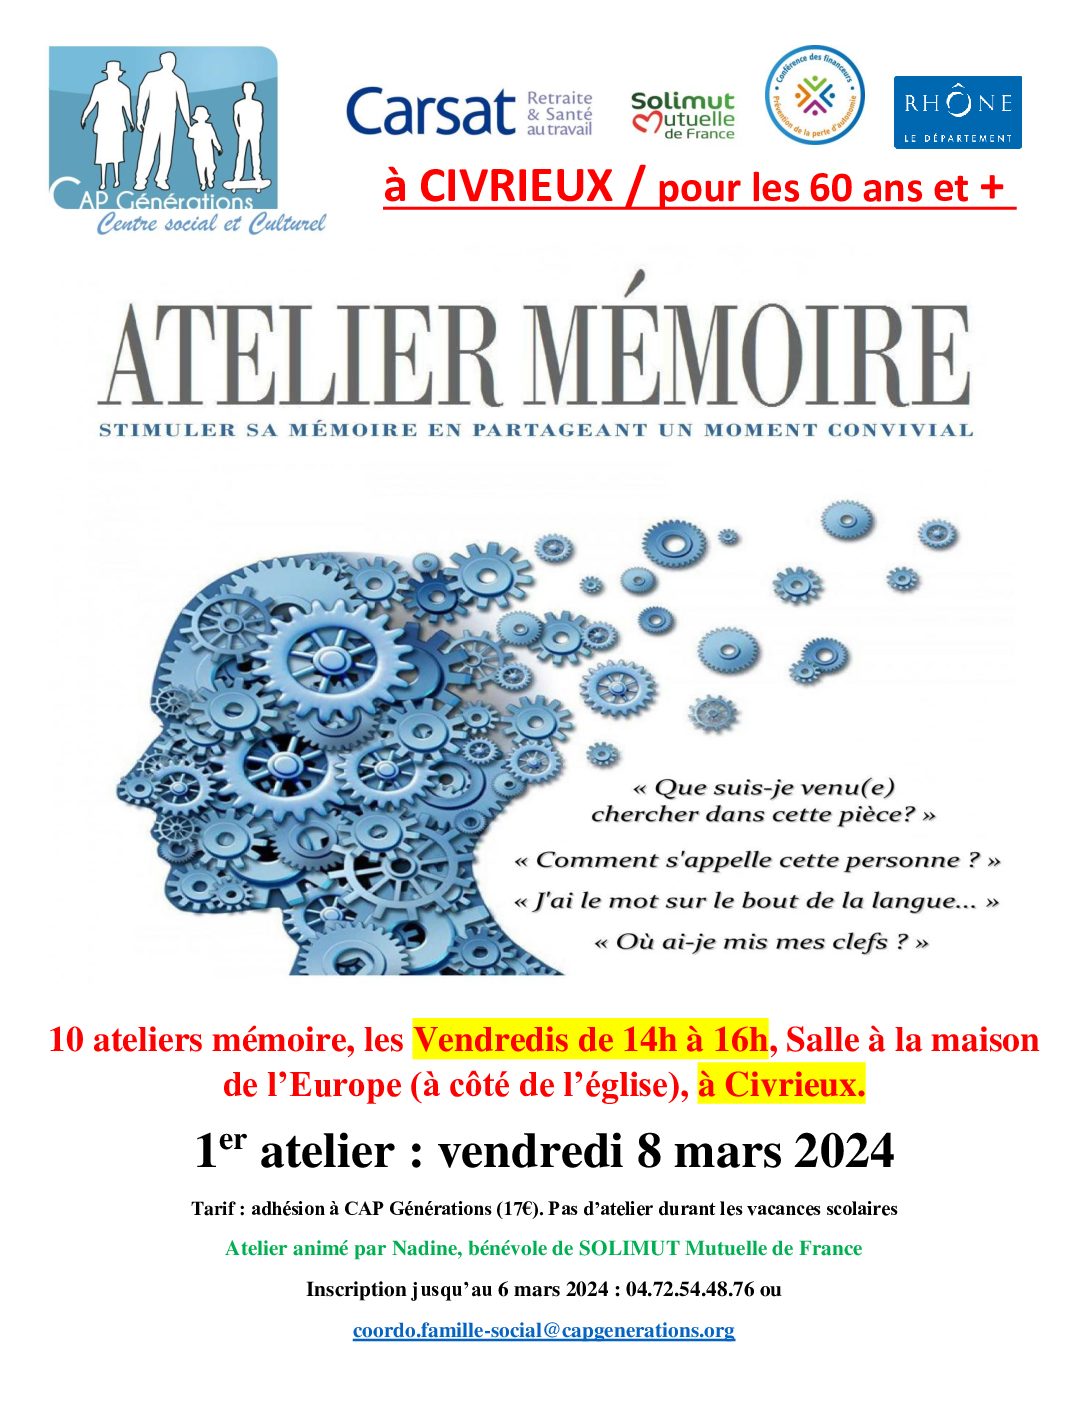 You are currently viewing Ateliers mémoire à CIVRIEUX